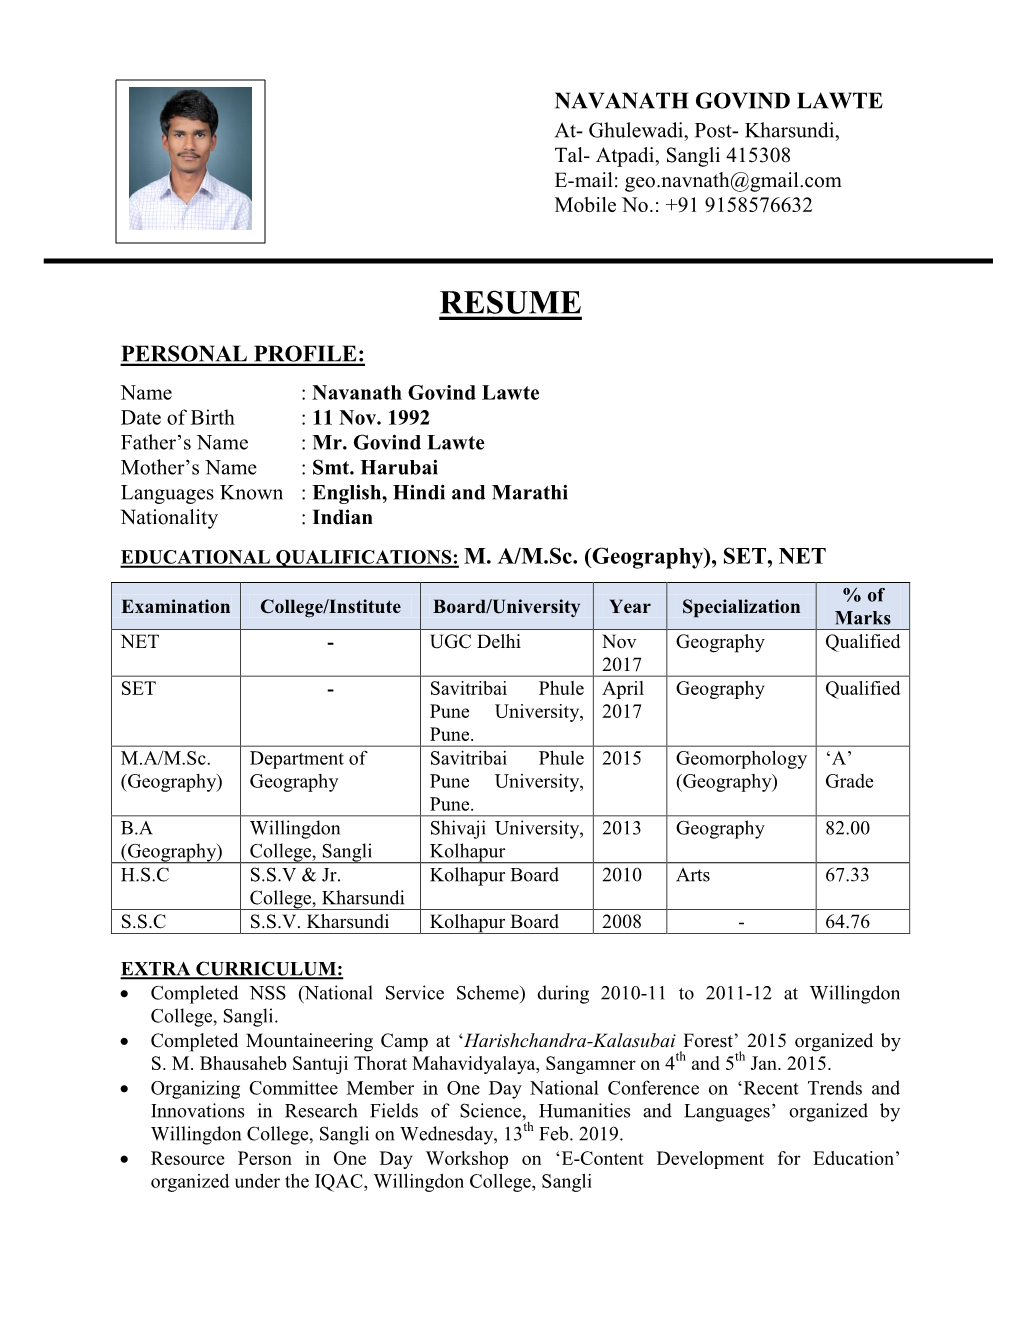 RESUME PERSONAL PROFILE: Name : Navanath Govind Lawte Date of Birth : 11 Nov